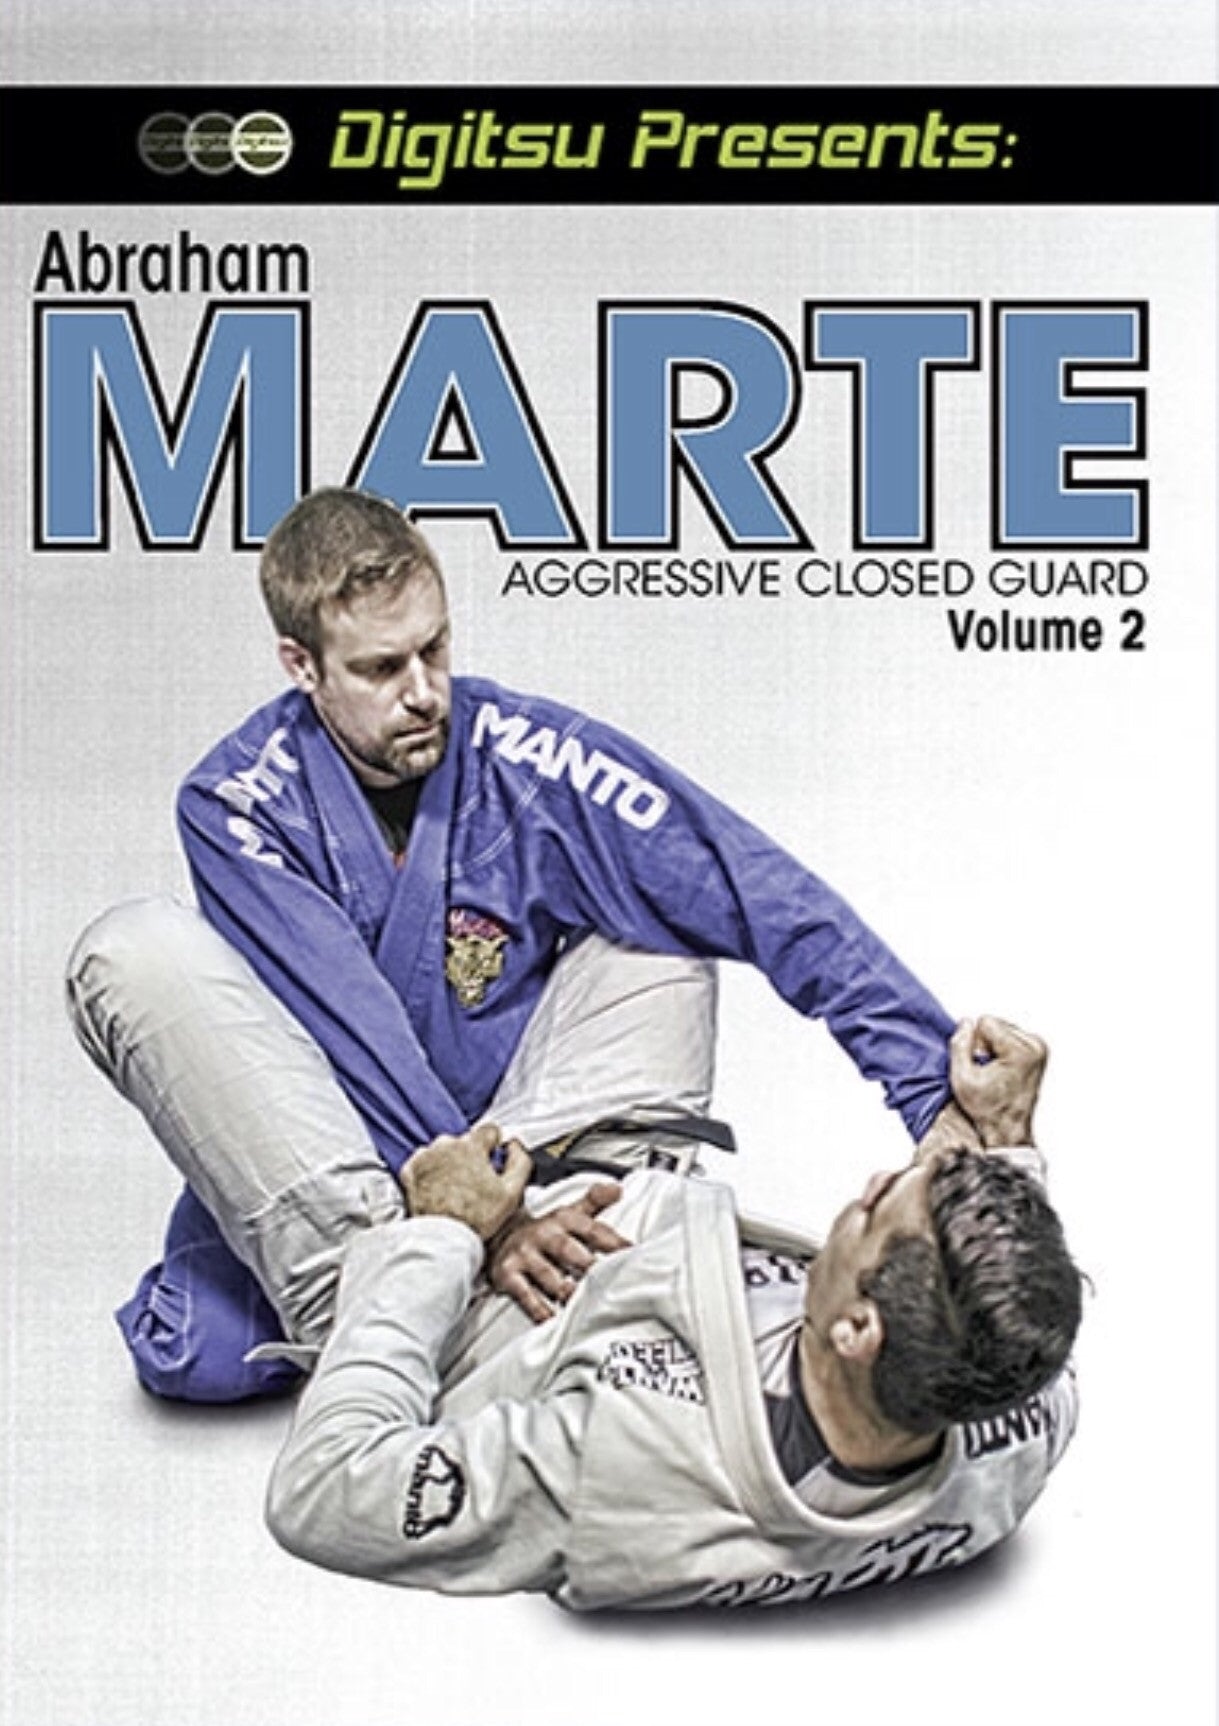 Aggressive Closed Guard Vol 2 DVD with Abraham Marte - Budovideos Inc